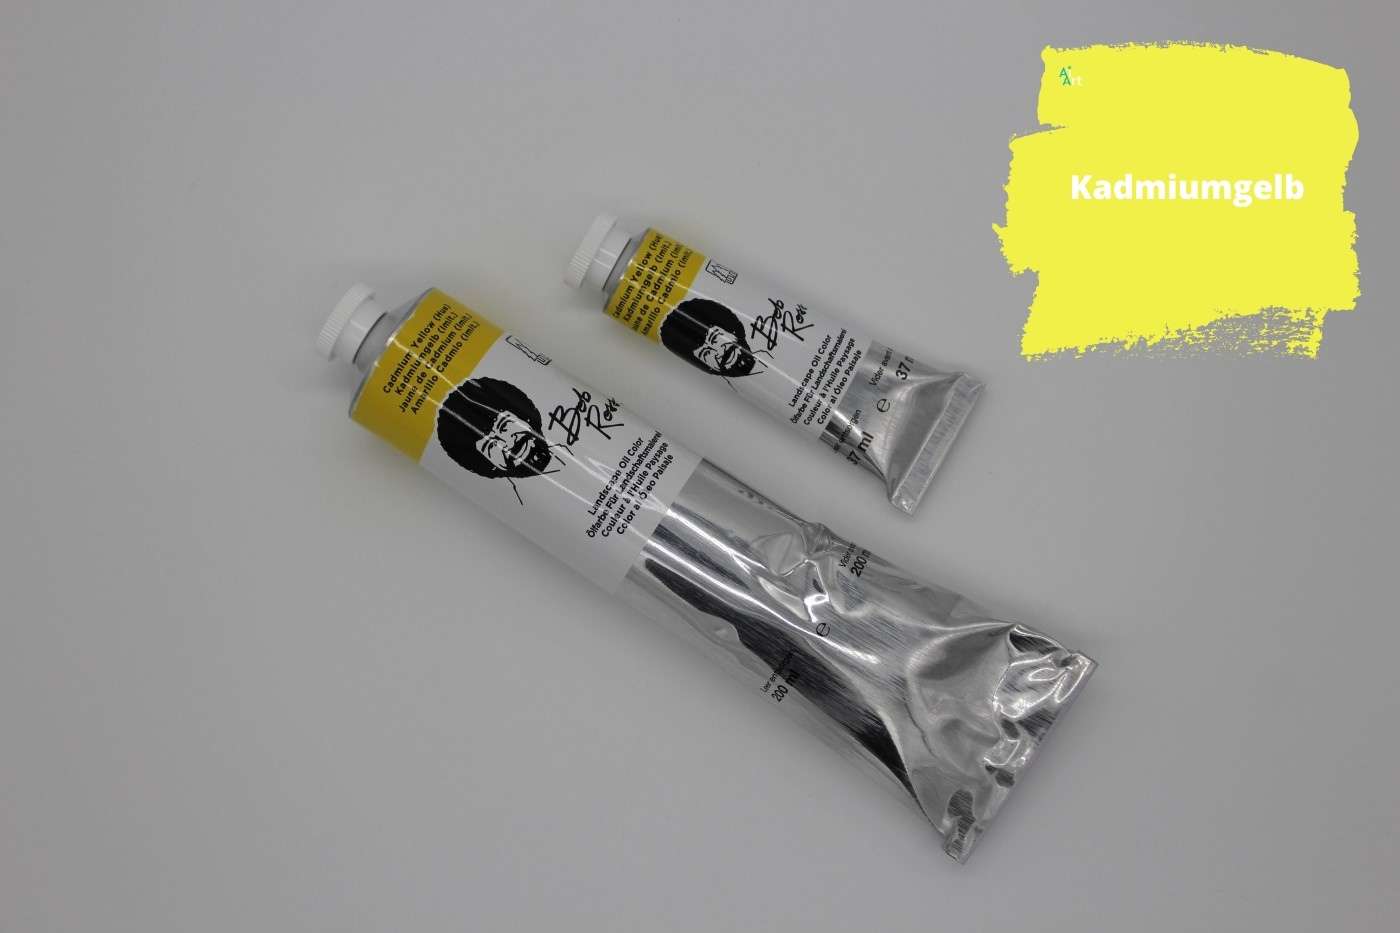 BOB ROSS® Kadmiumgelb bei aiart.ch